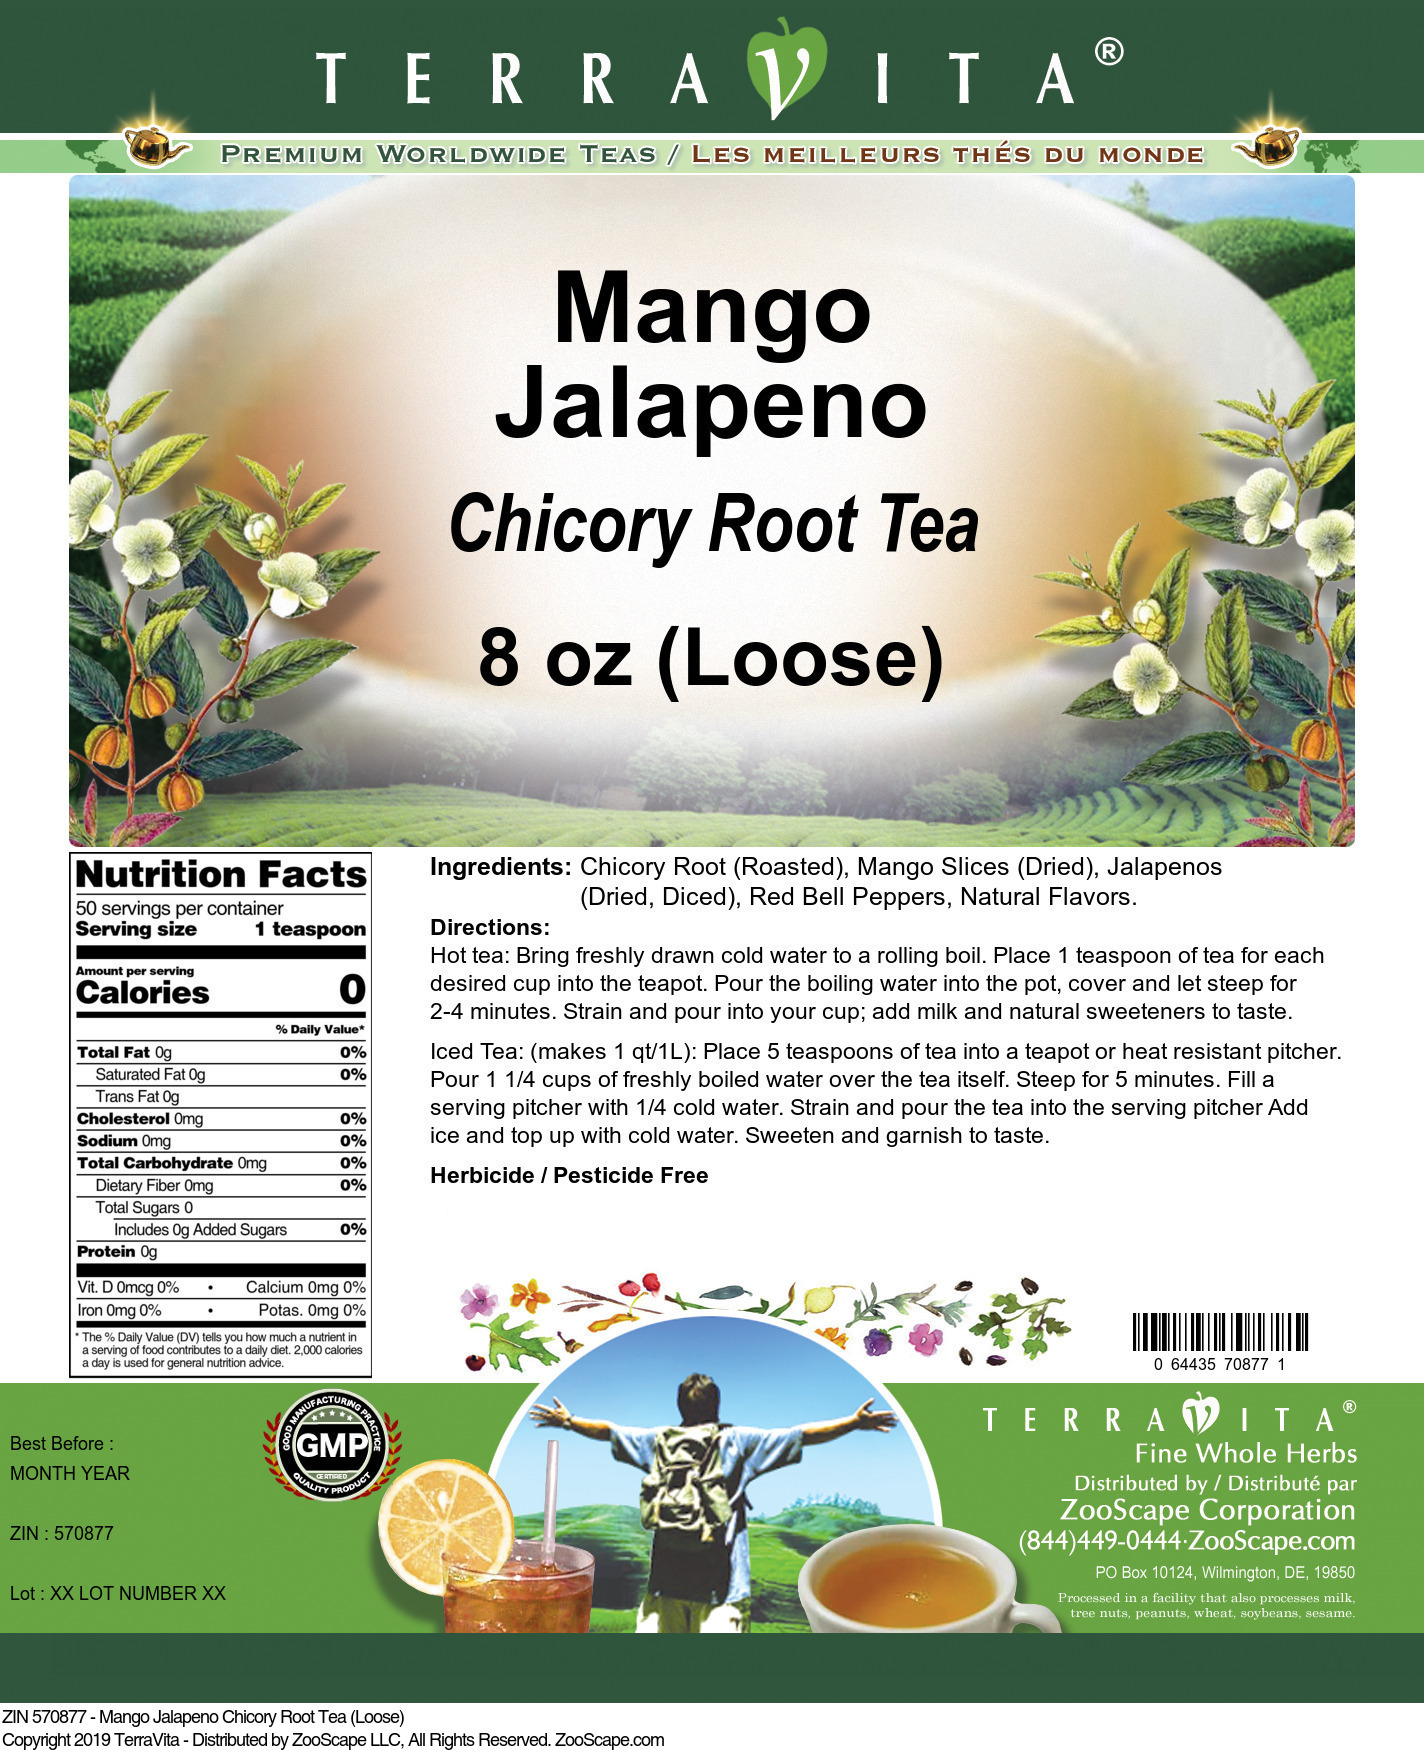 Mango Jalapeno Chicory Root Tea (Loose) - Label